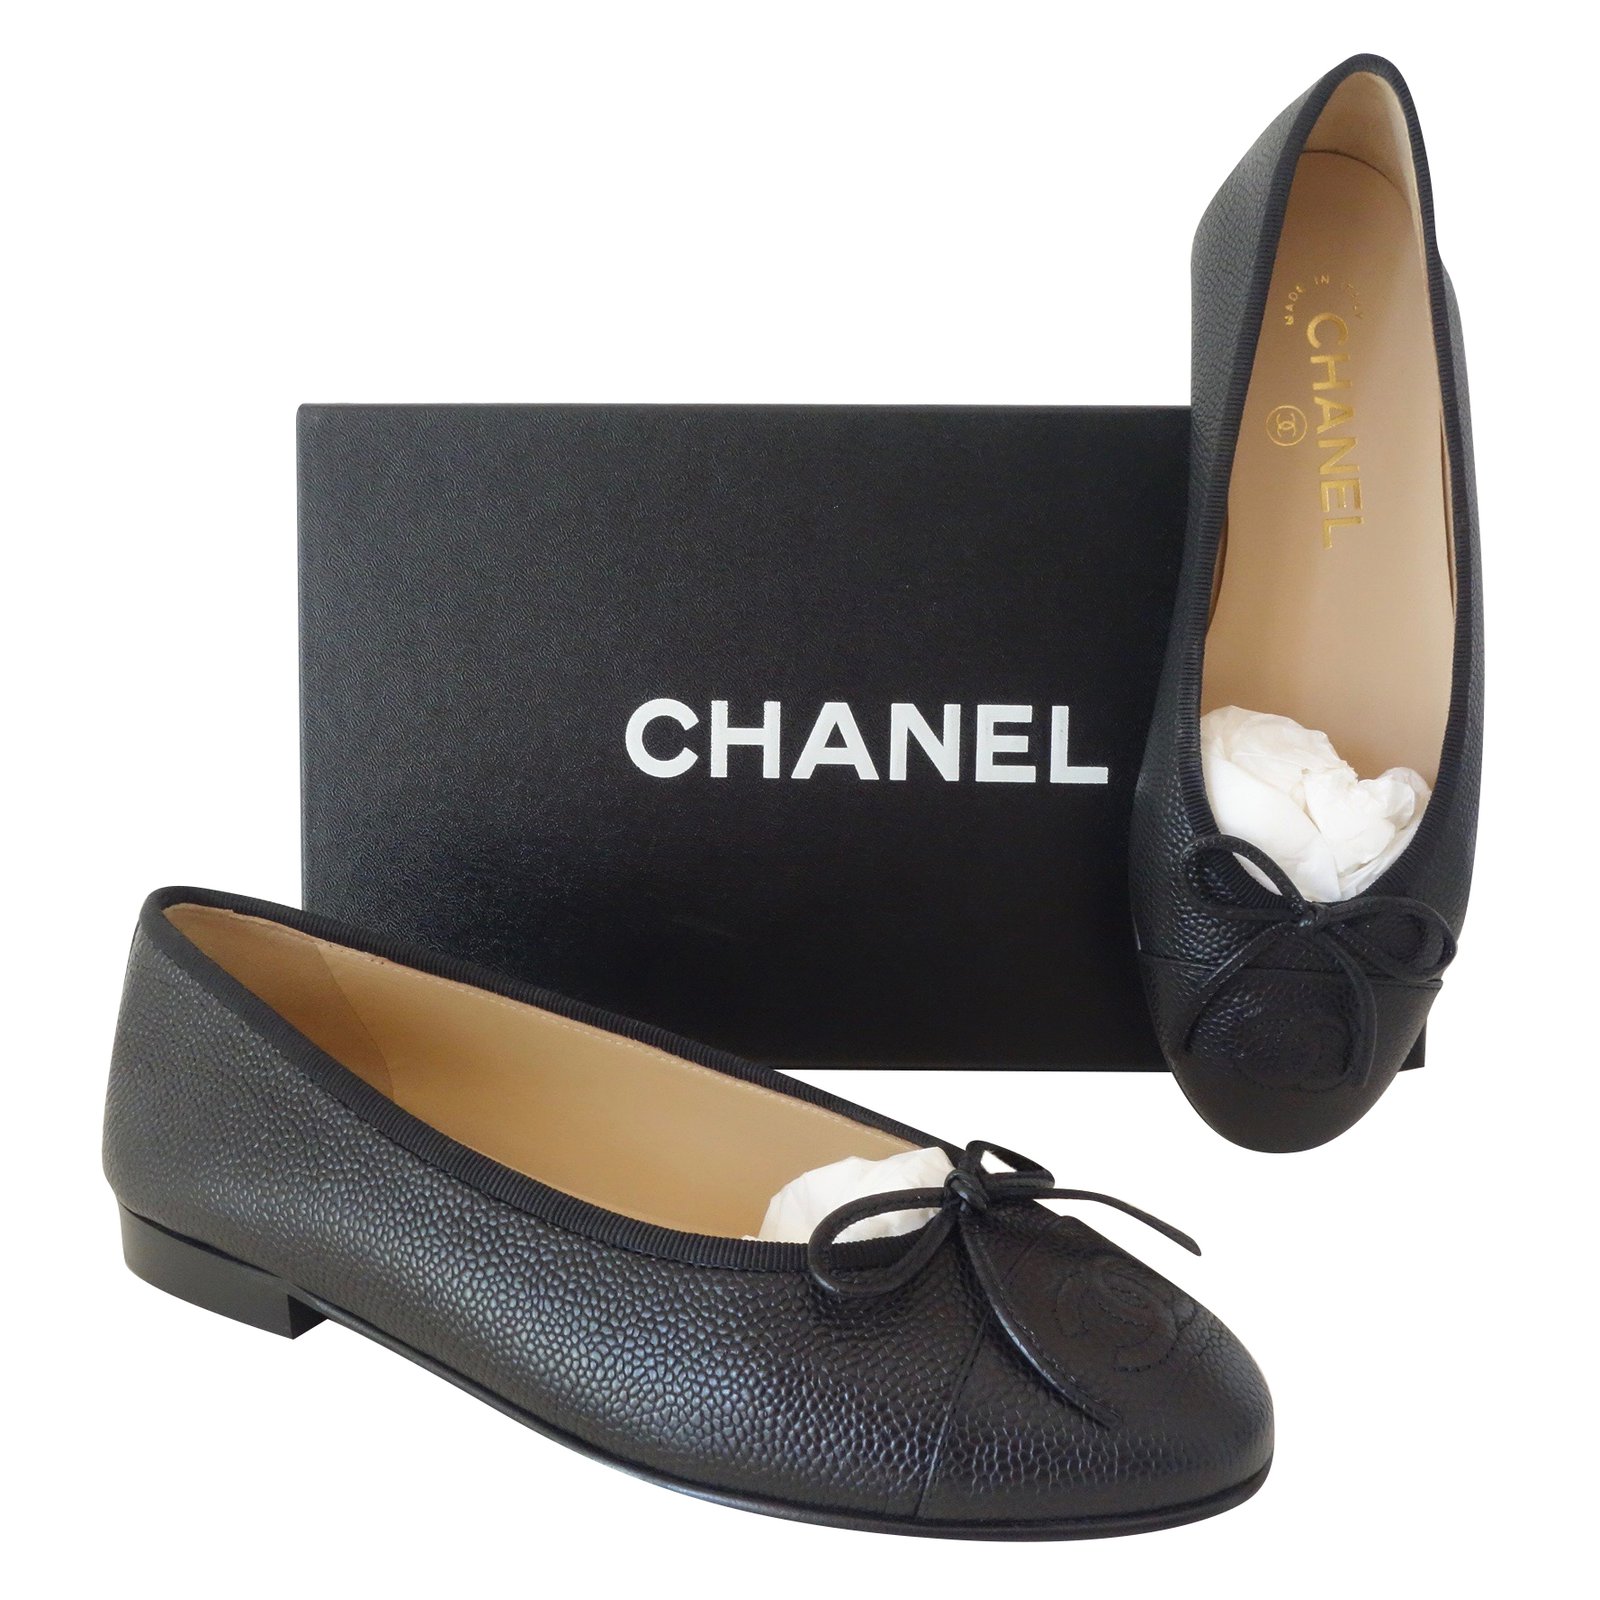 chanel women's shoes size us 7